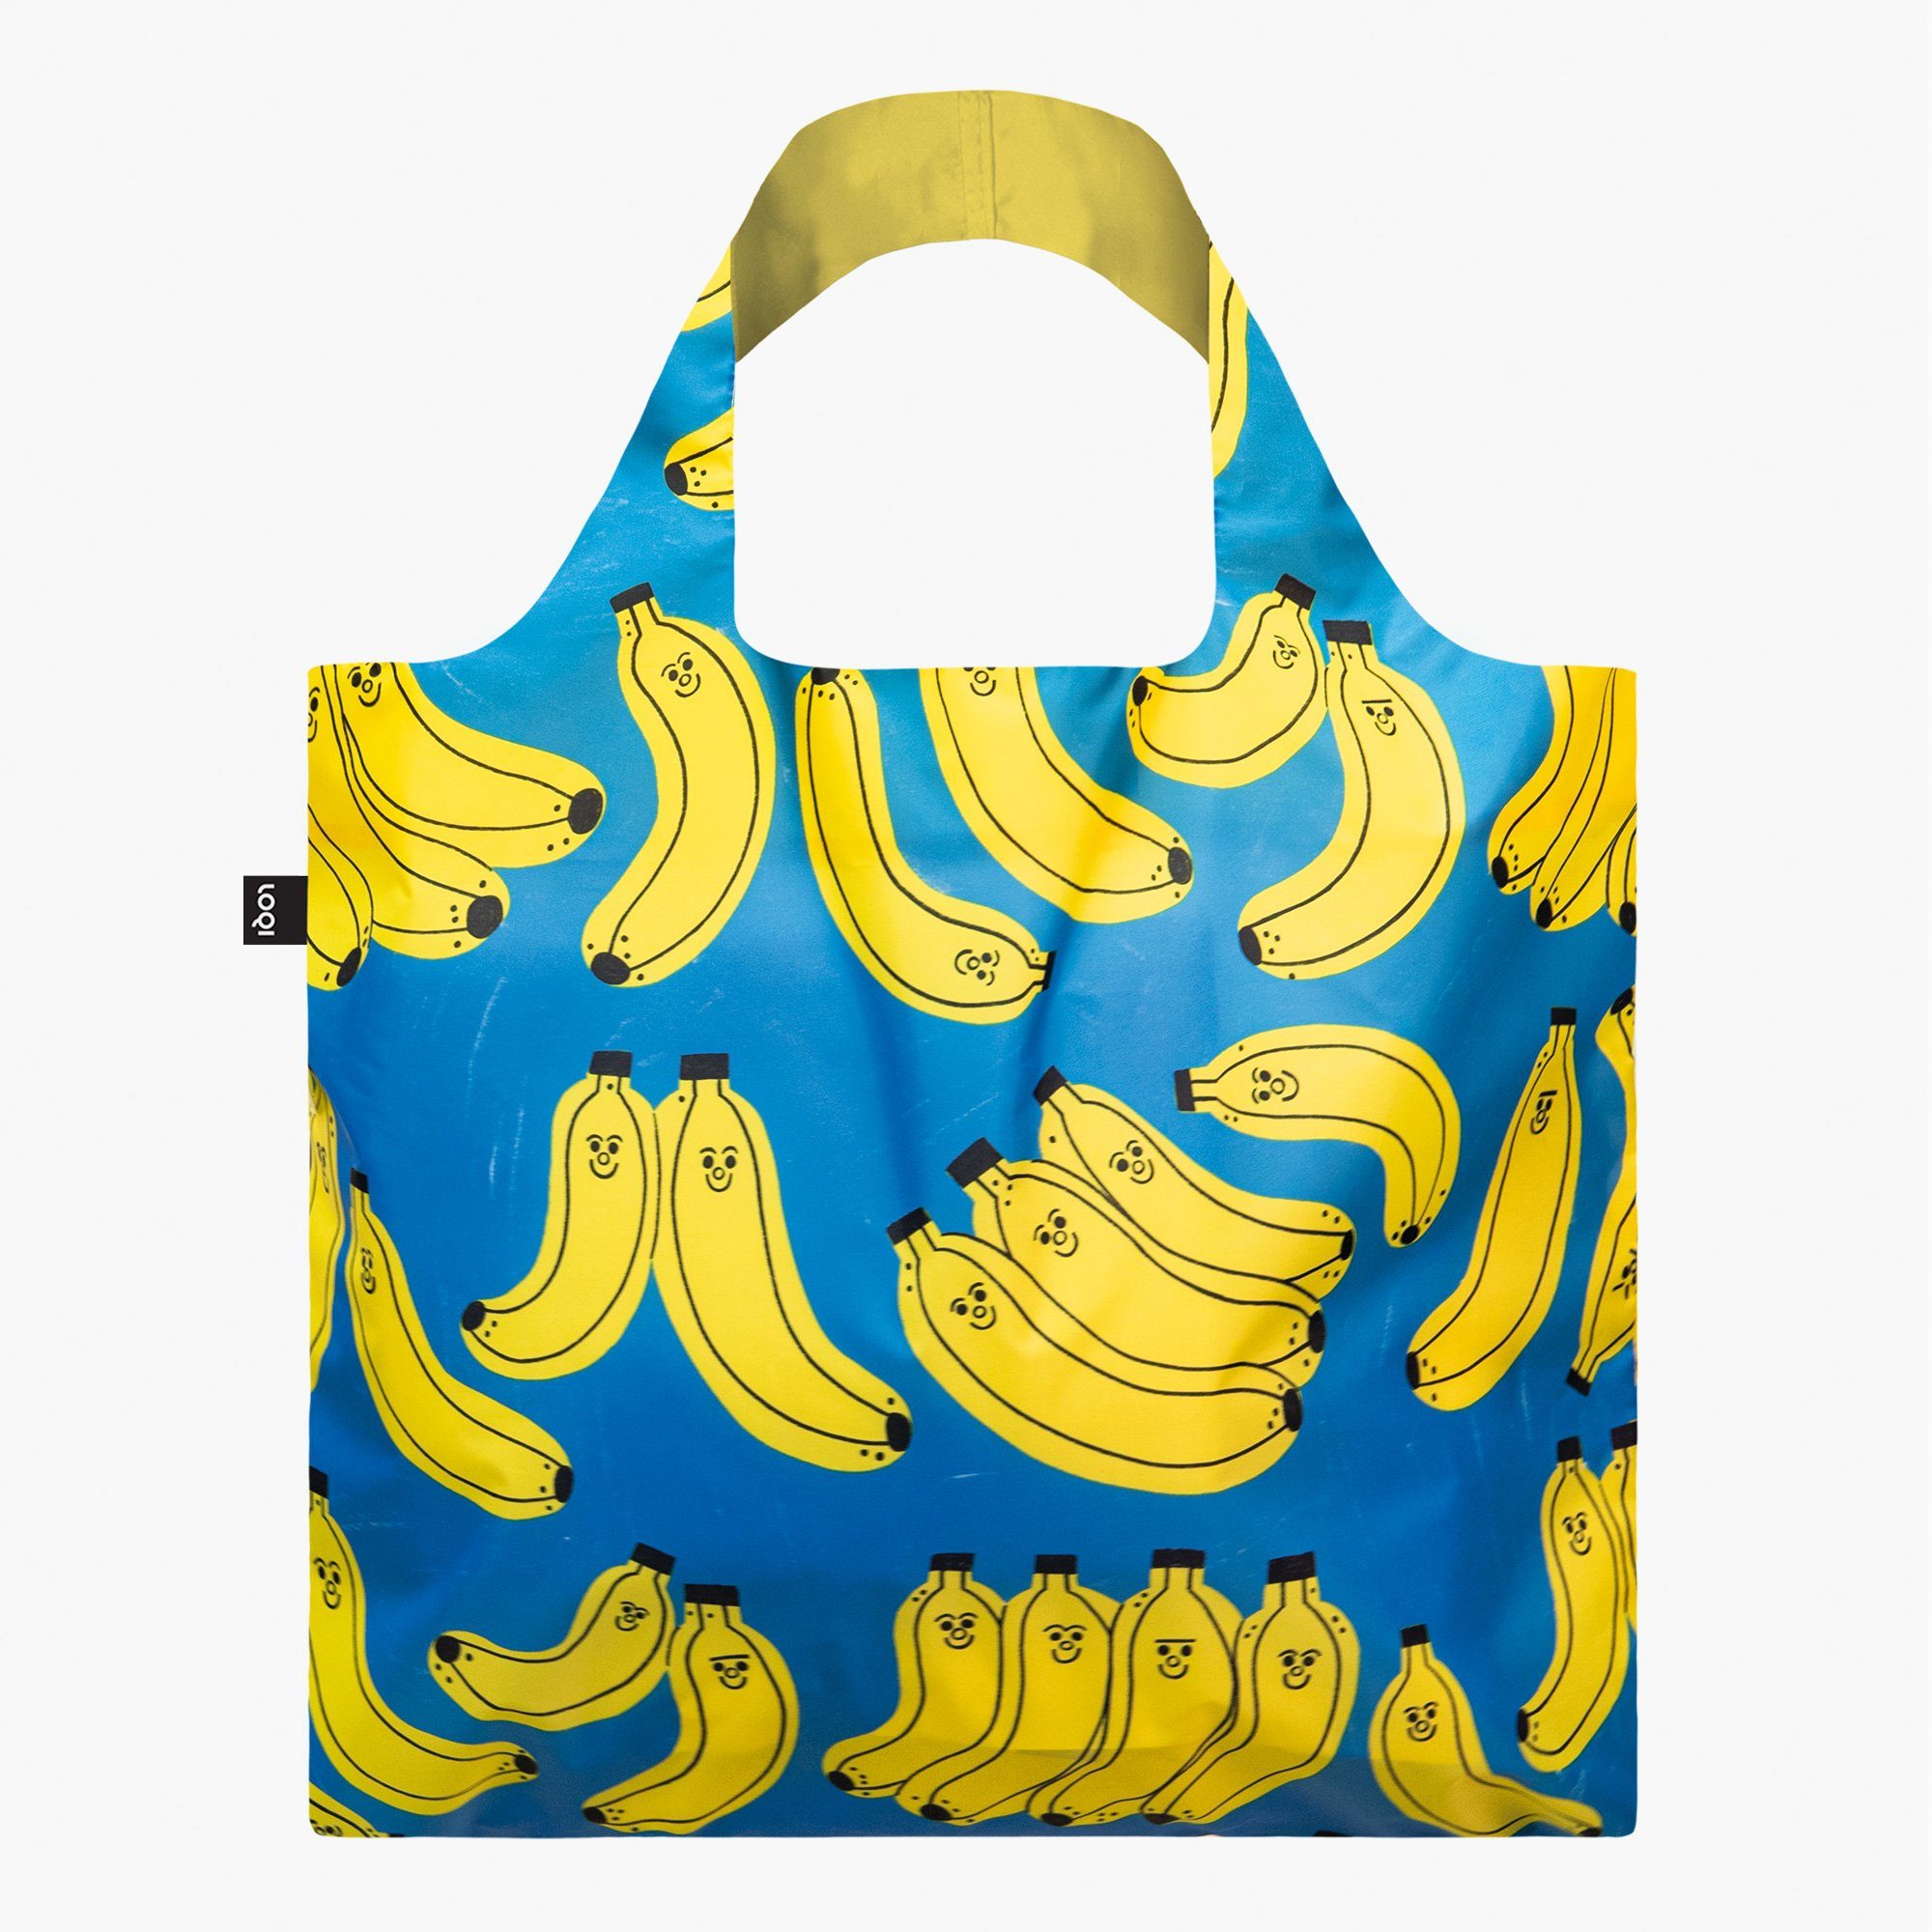 Share more than 139 bag bag bag banana latest - 3tdesign.edu.vn